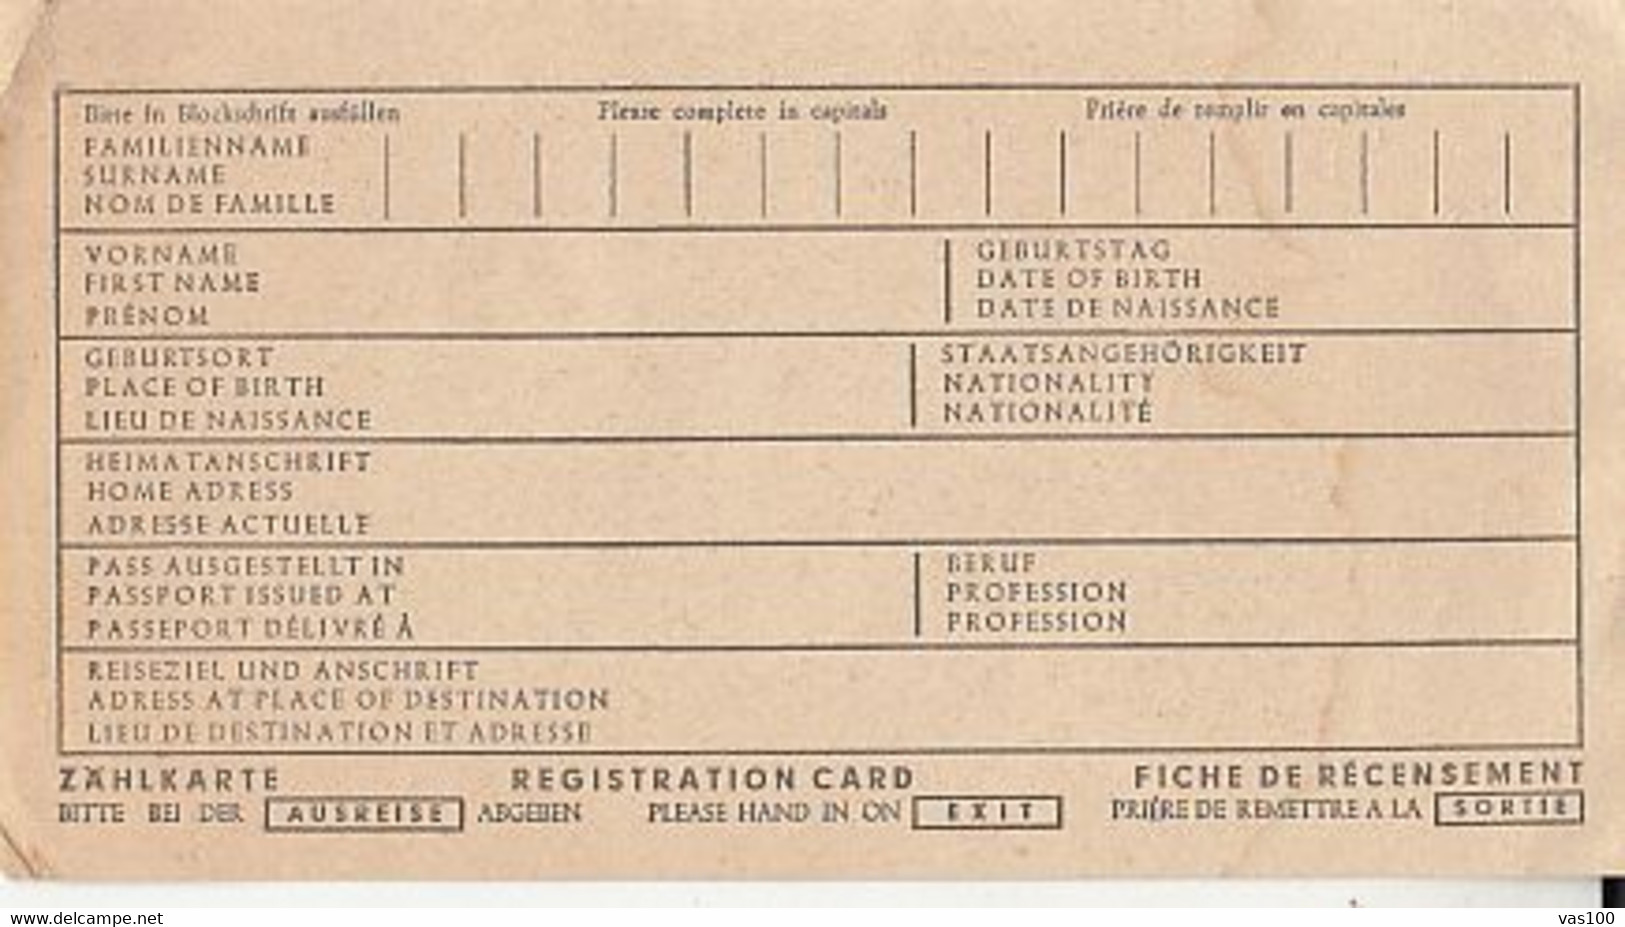 VISA CARD REGISTRATION FORM, GERMAN EMBASSY IN BUCHAREST INK STAMP, 1970, ROMANIA - 1950 - ...